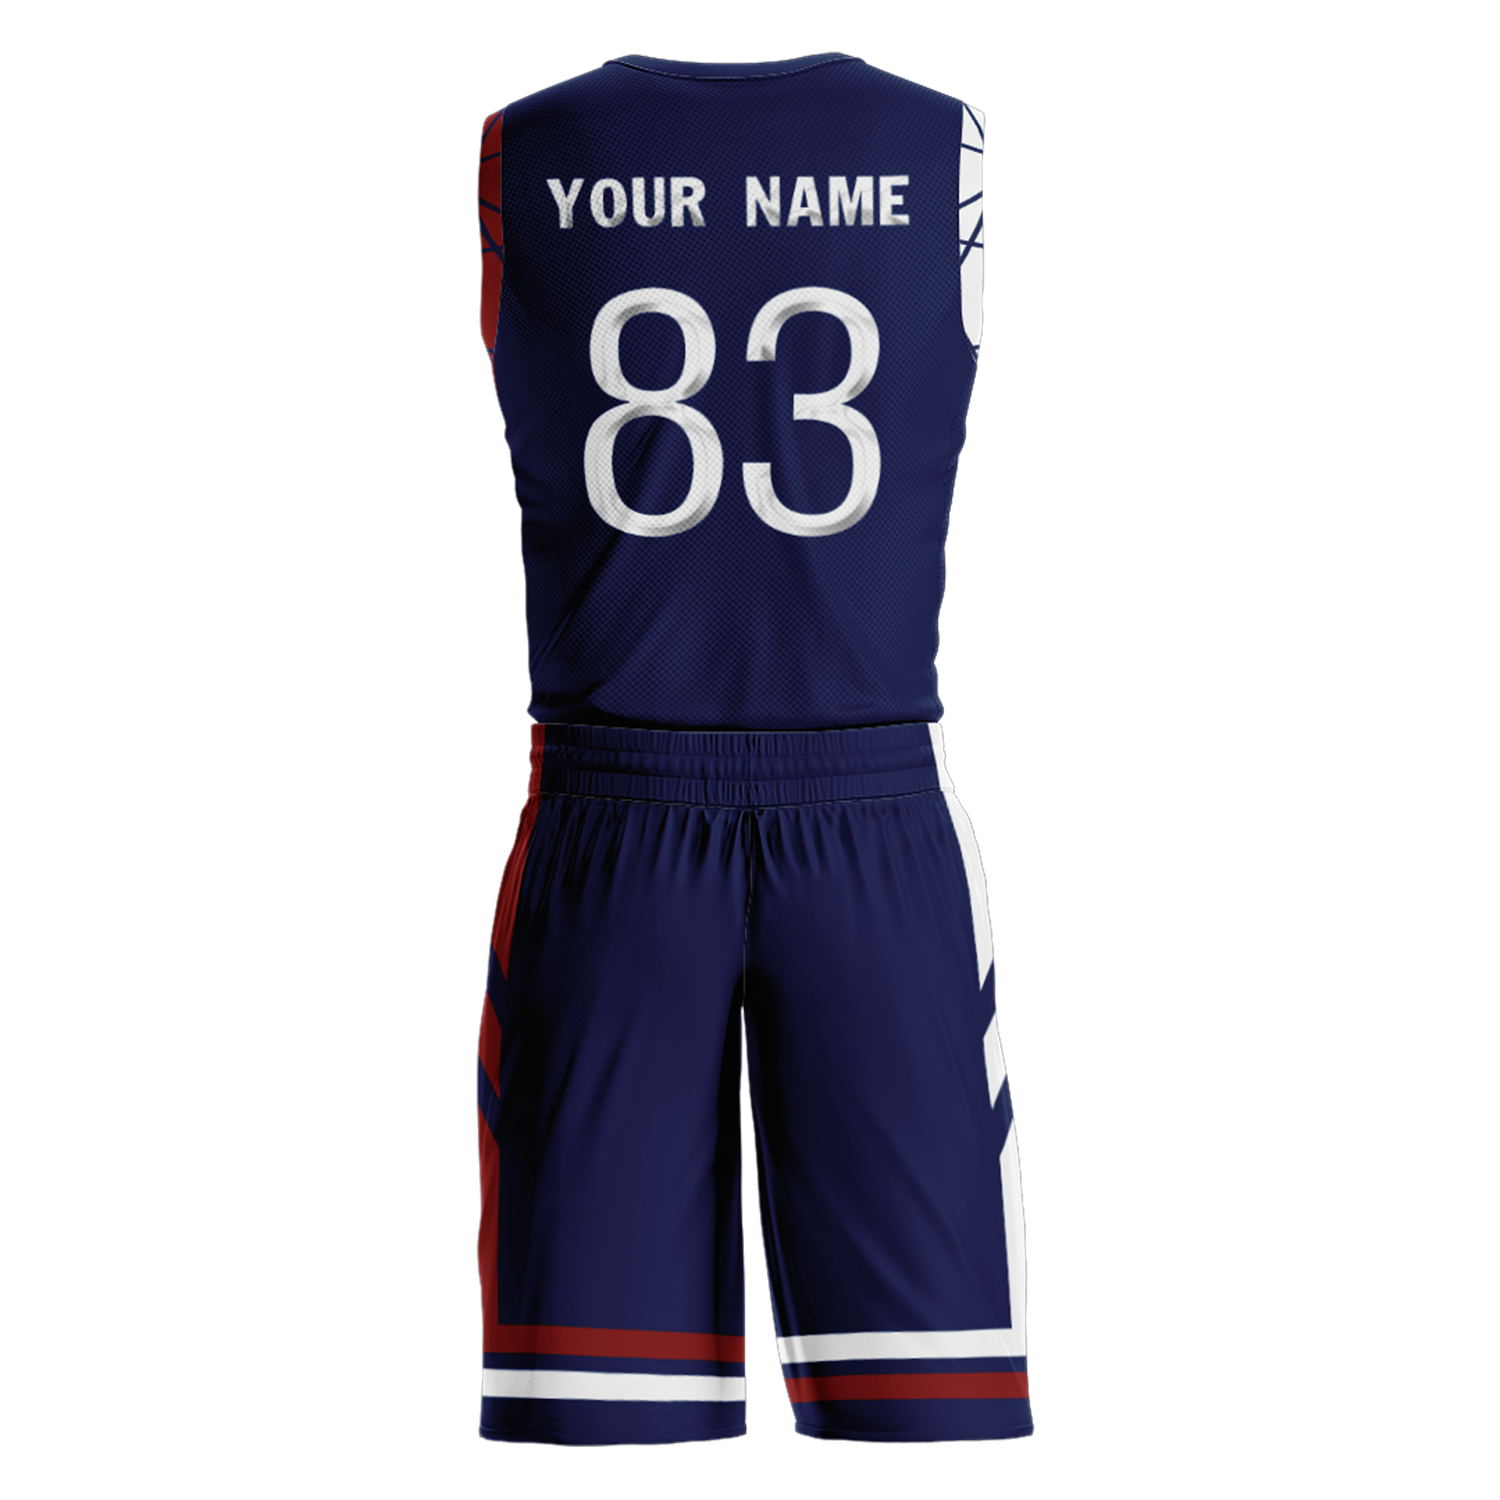 Custom France Team Basketball Suits